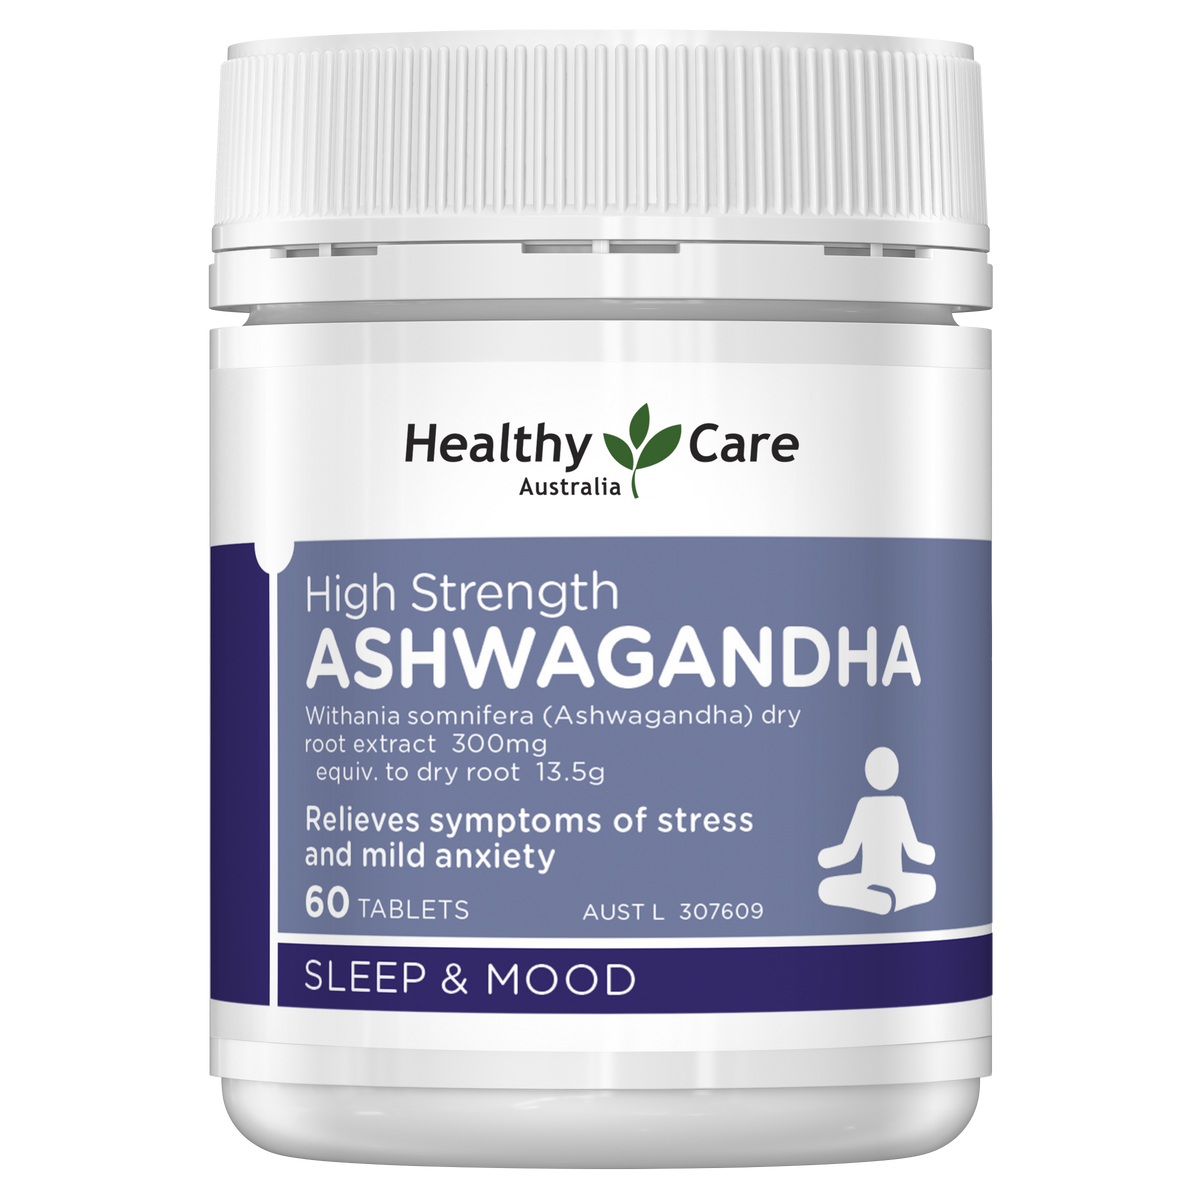 Healthy Care High Strength Ashwagandha 60 Tablets